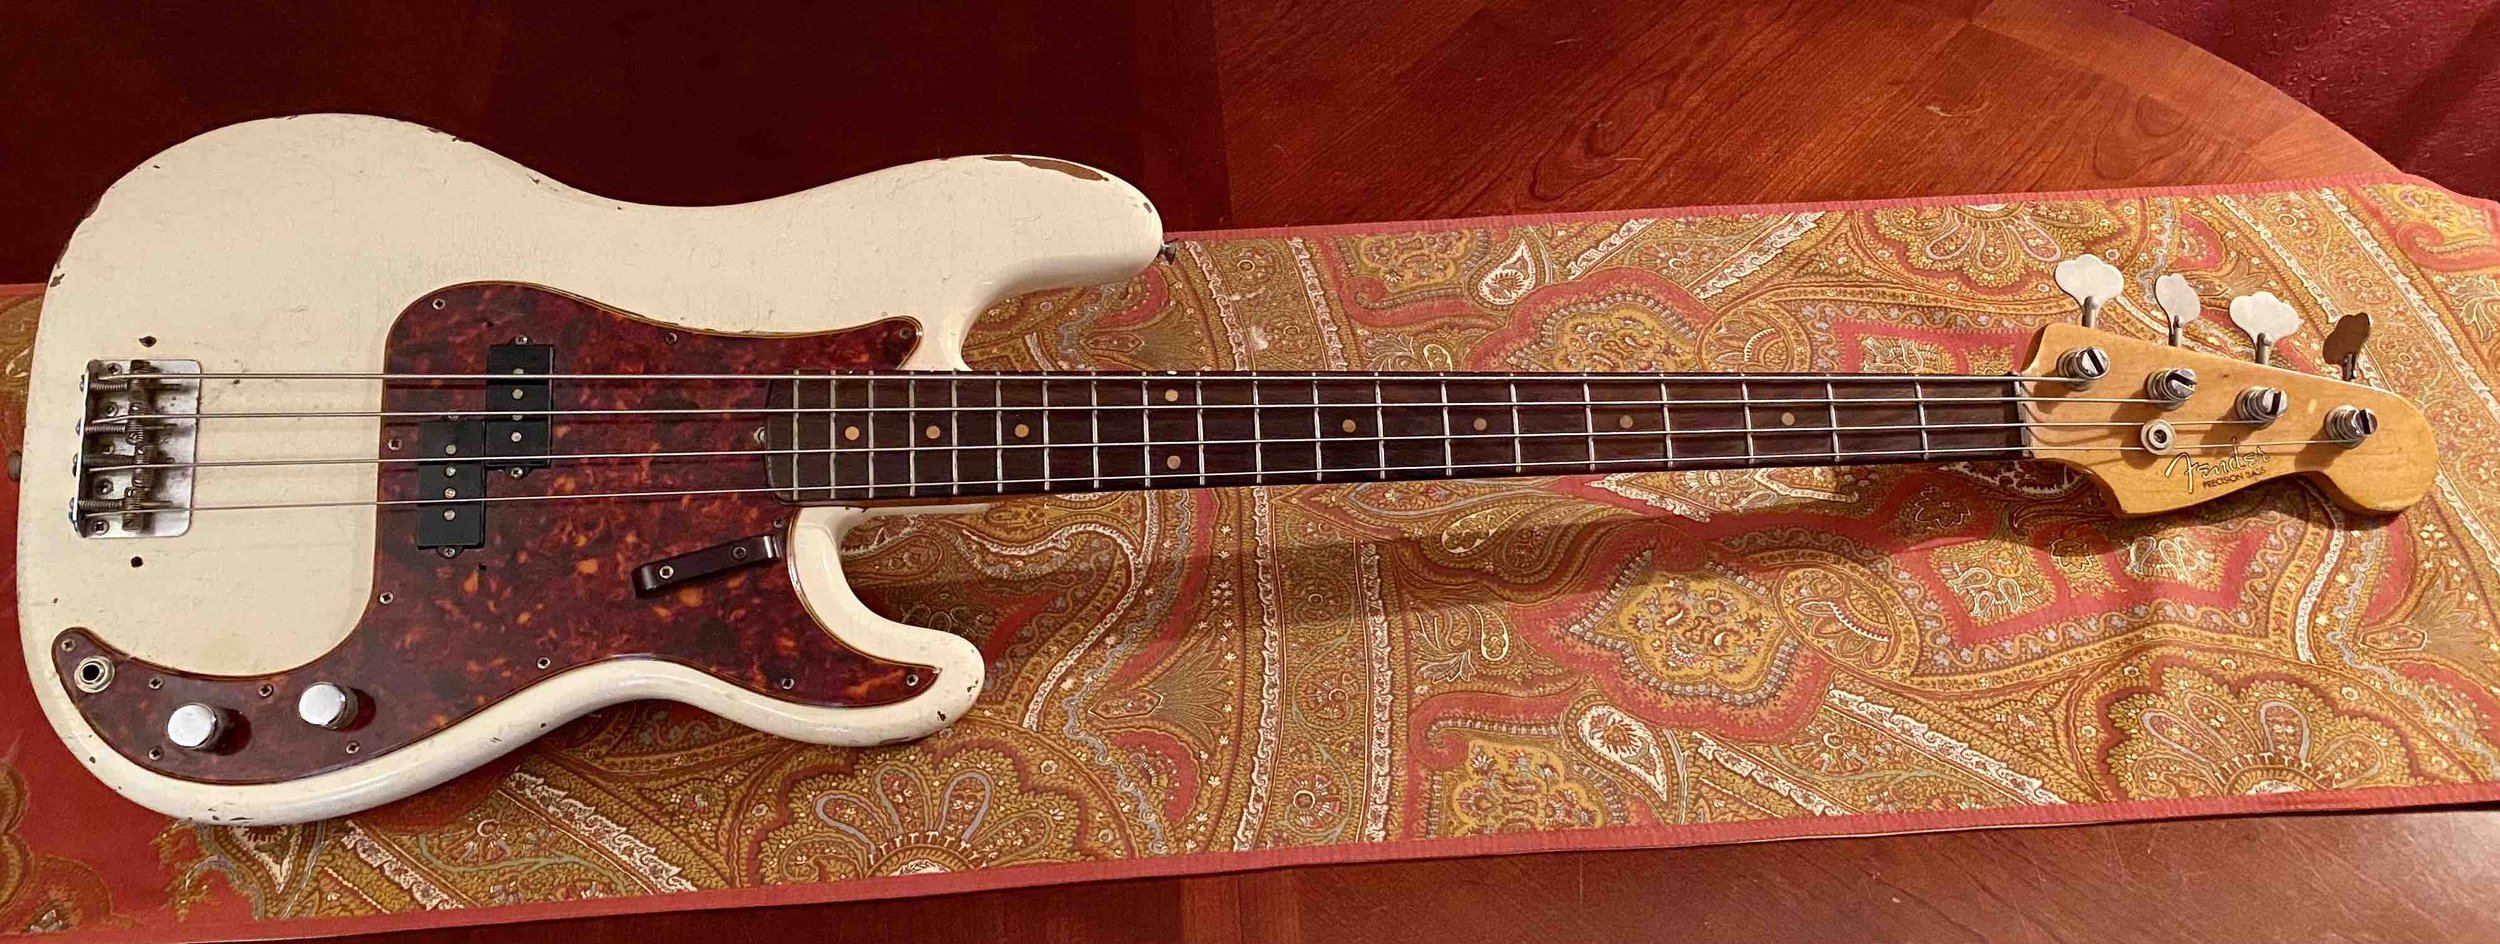 1961 fender bass.jpg